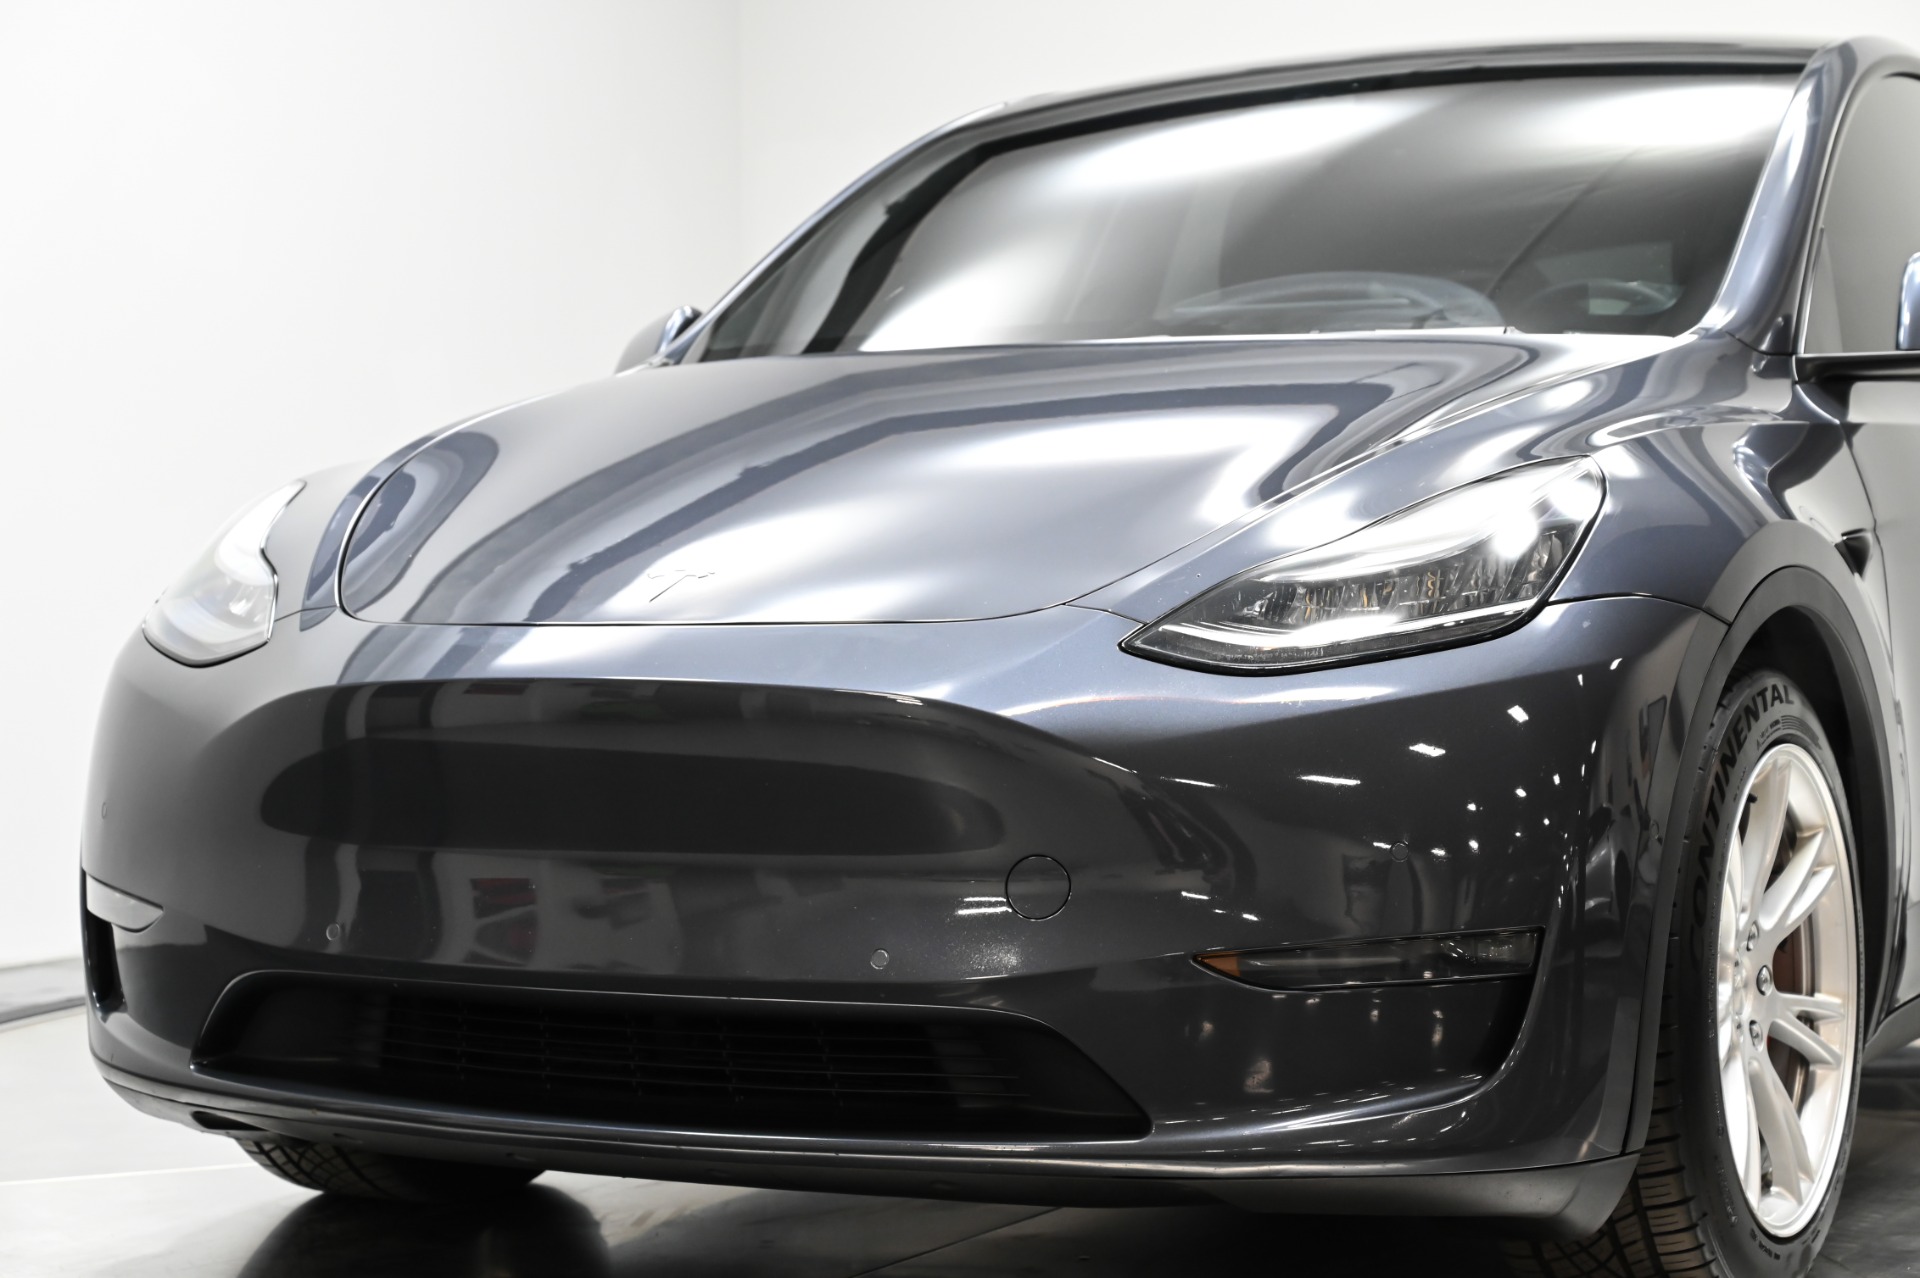 Tesla Grille Model 3 Model Y Decal Sticker Like Aston Martin Cars 